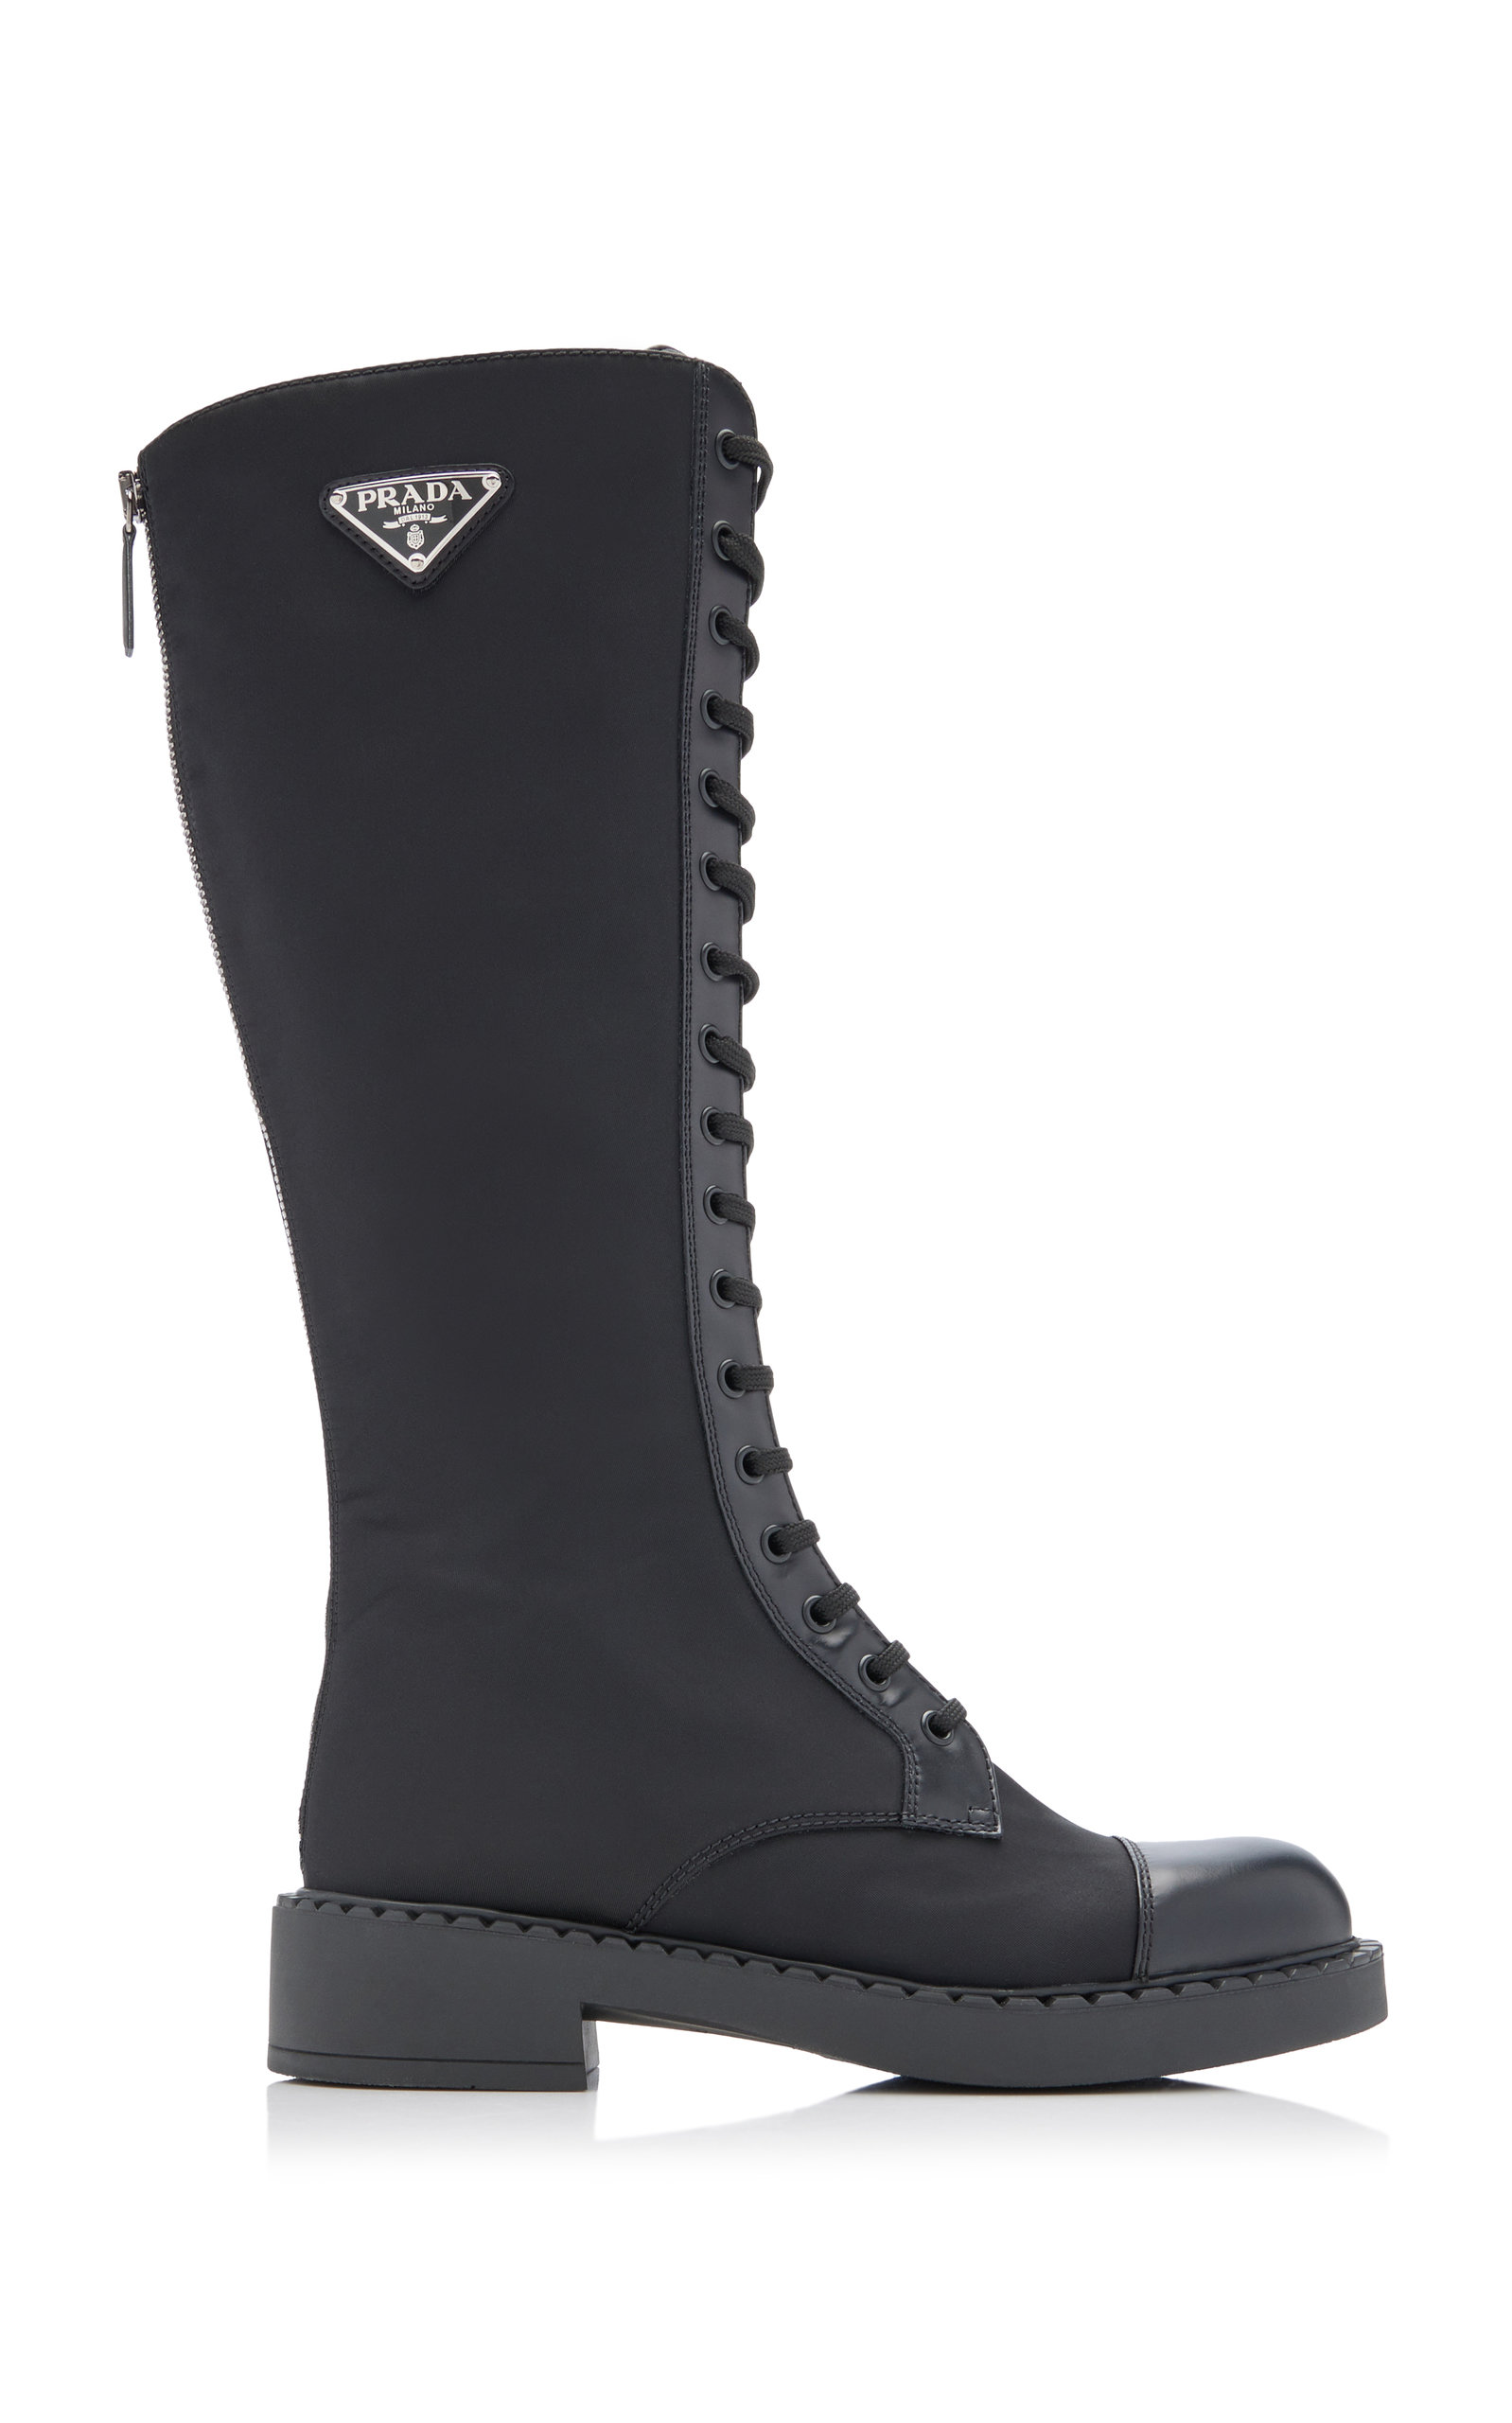 Prada - Leather-Trimmed Nylon Lace-Up Knee Boots - Black - IT 38 - Moda Operandi